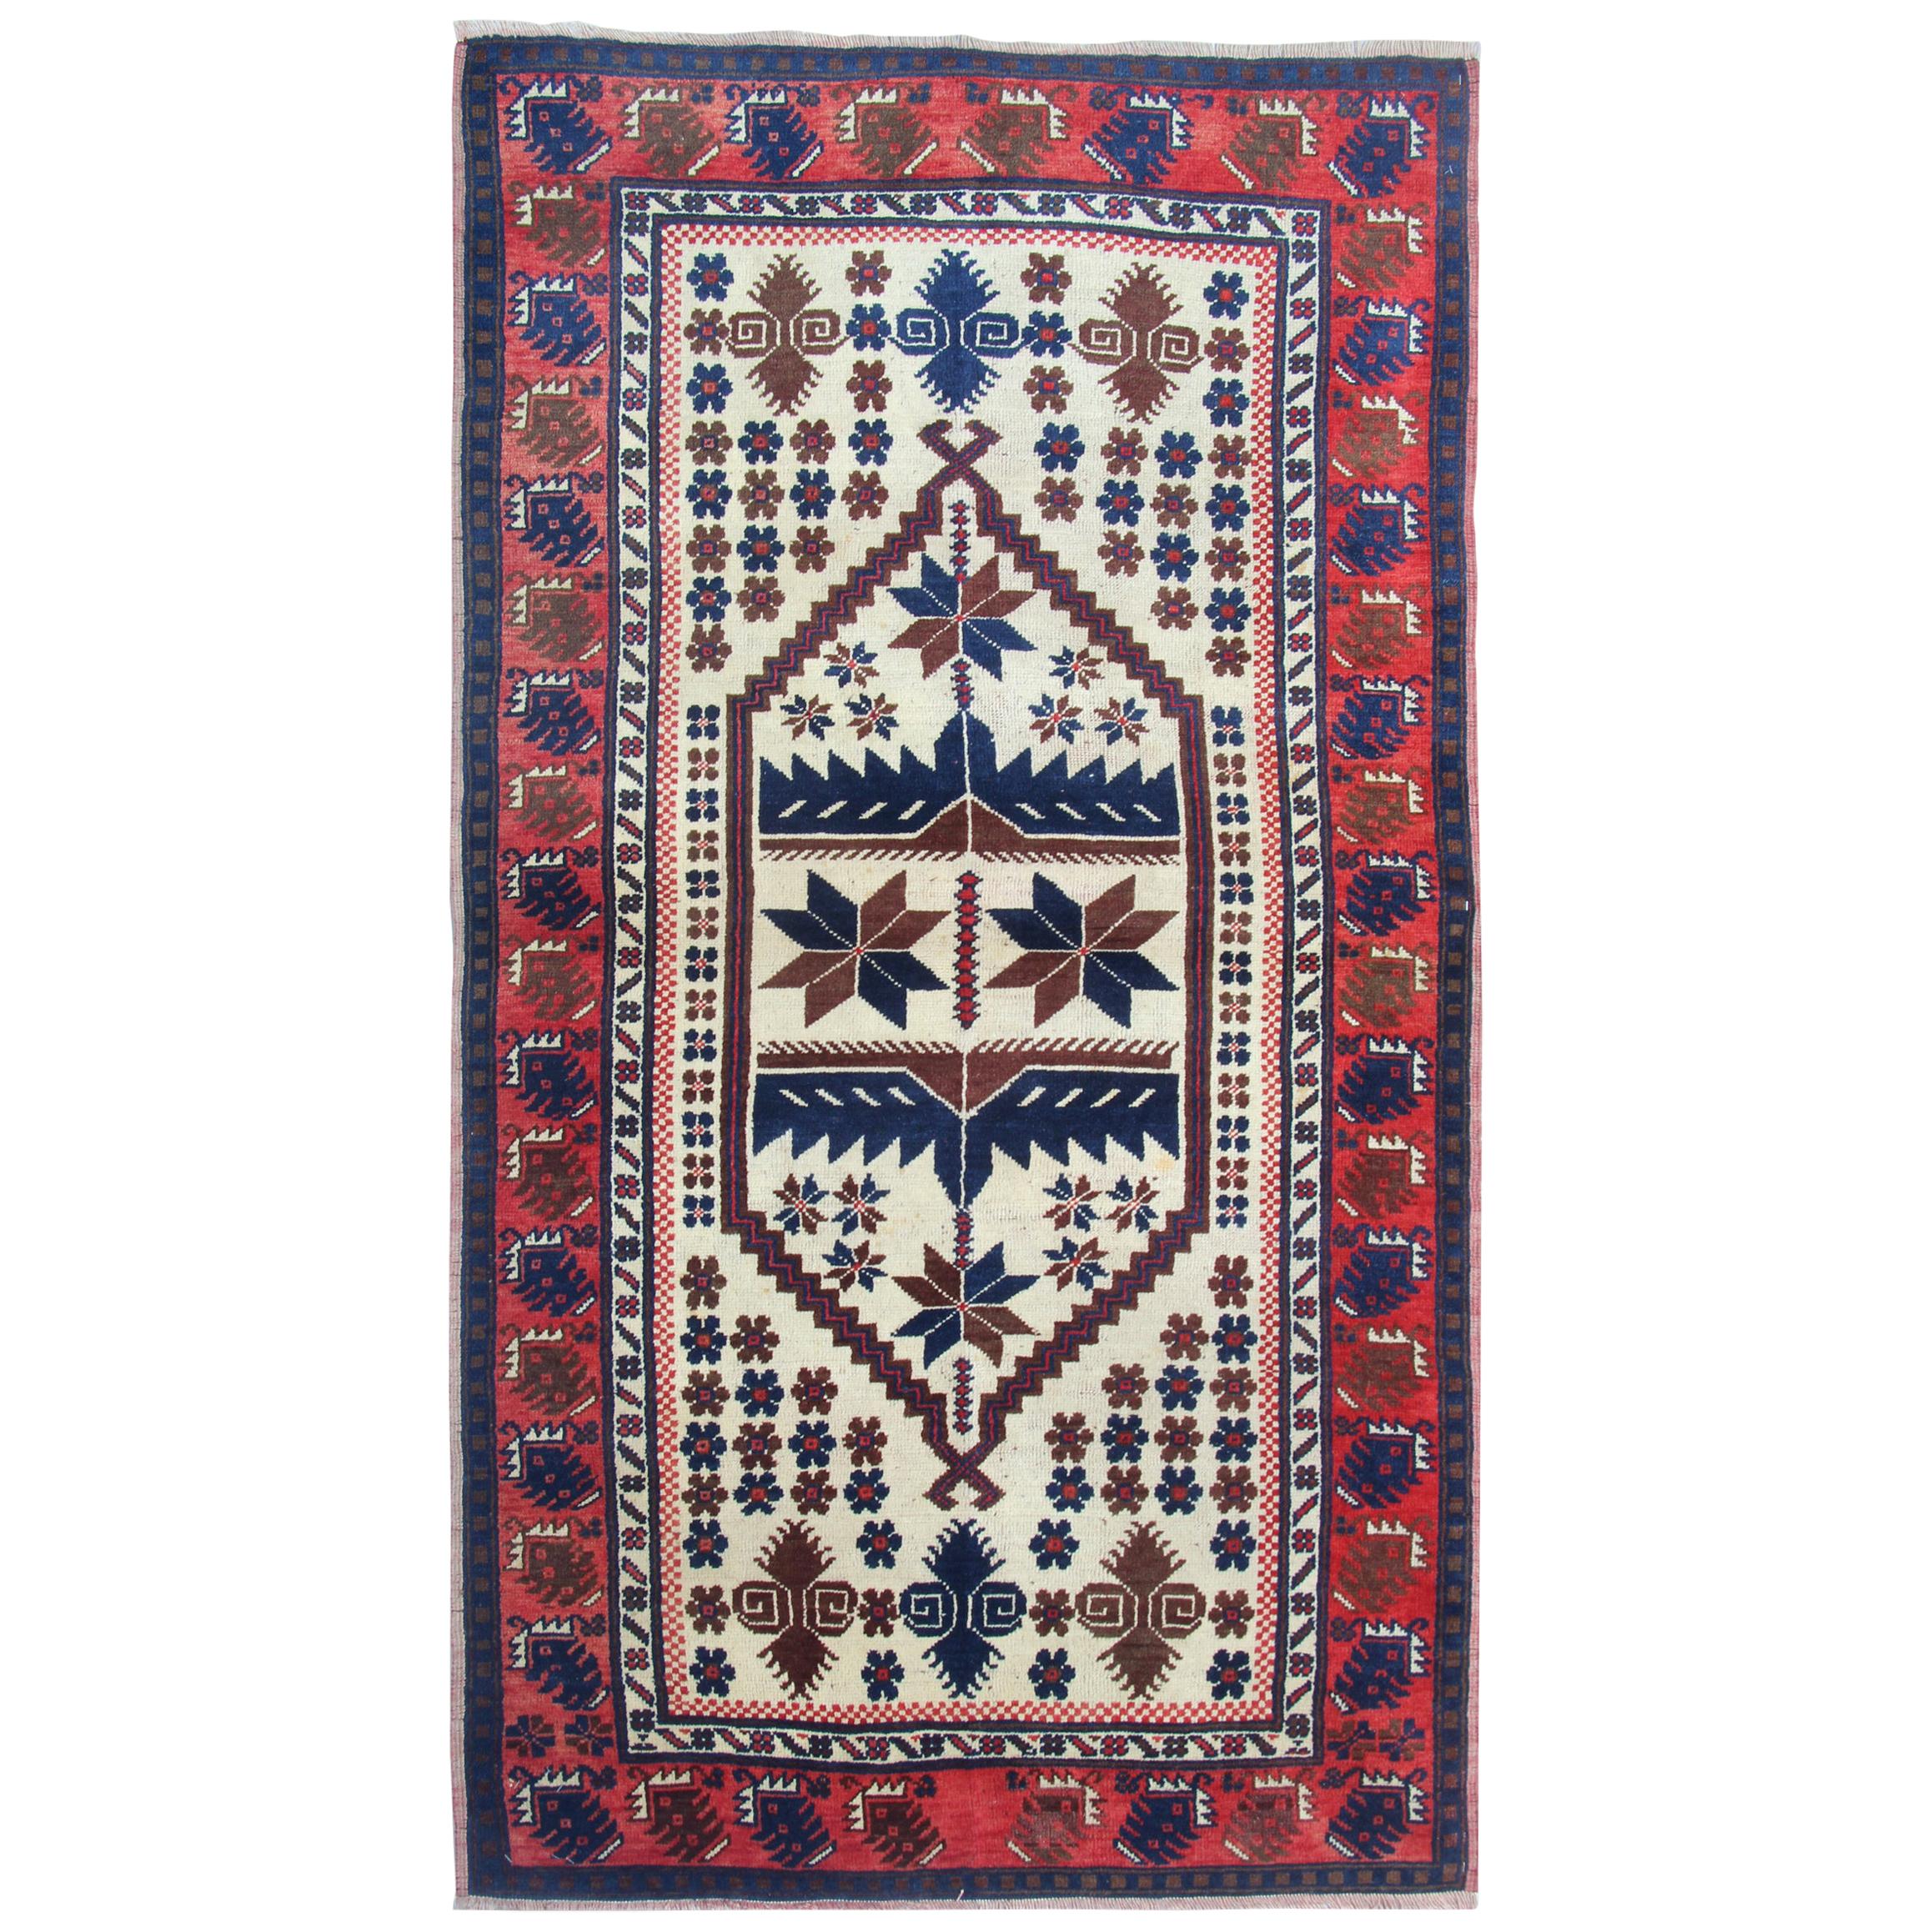 Handmade Carpets Vintage Rugs, Geometric Oriental Red Beige Area Rug For Sale